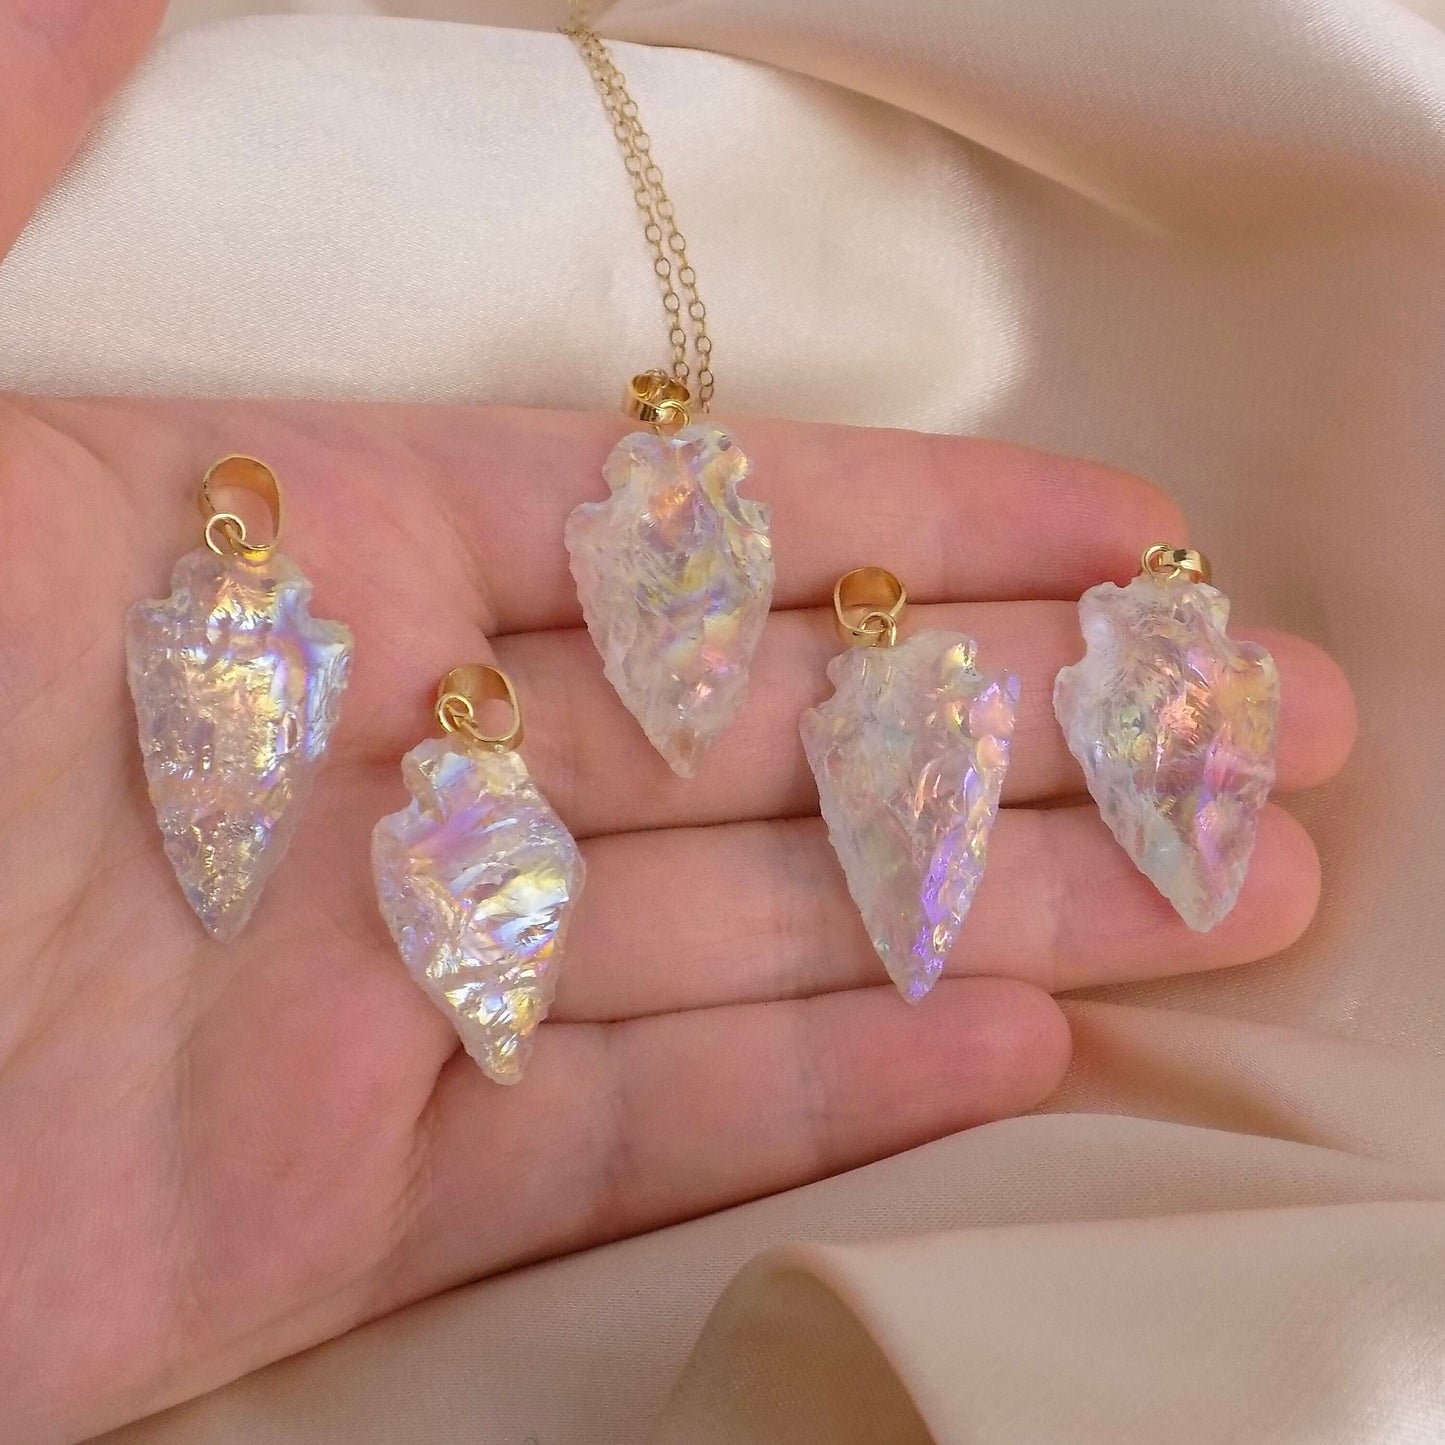 Angel Aura Quartz Necklace, Iridescent Arrowhead Pendant Necklace Gold, Gift For Her, G14-803